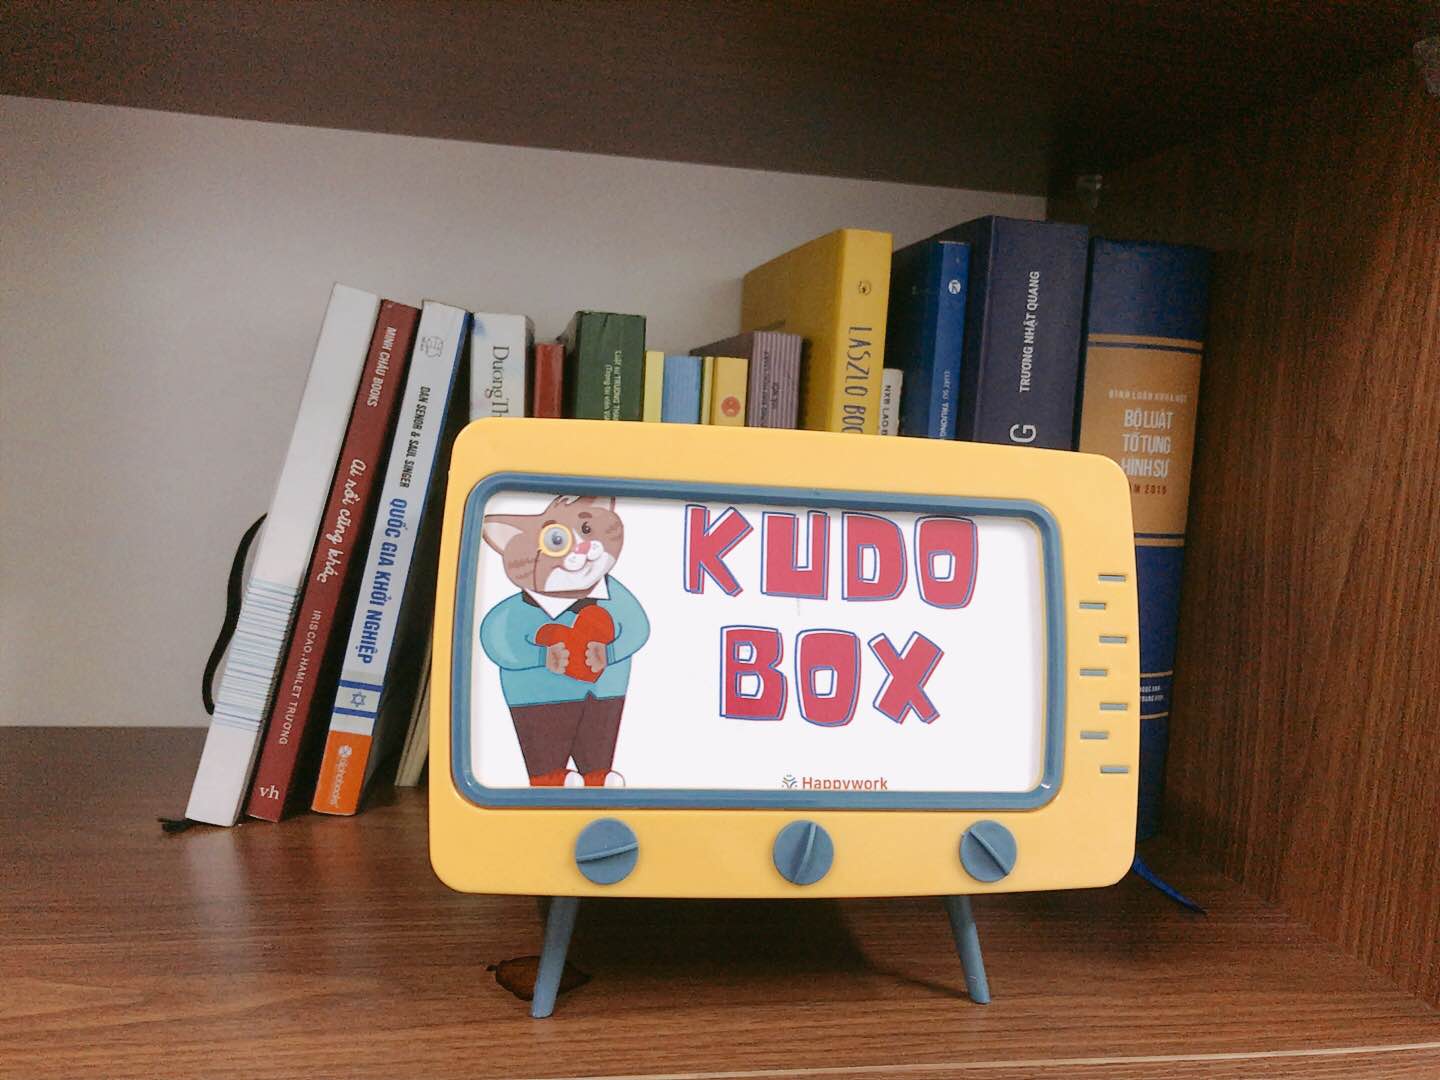 Văn hóa Kudo Box tại Happywork